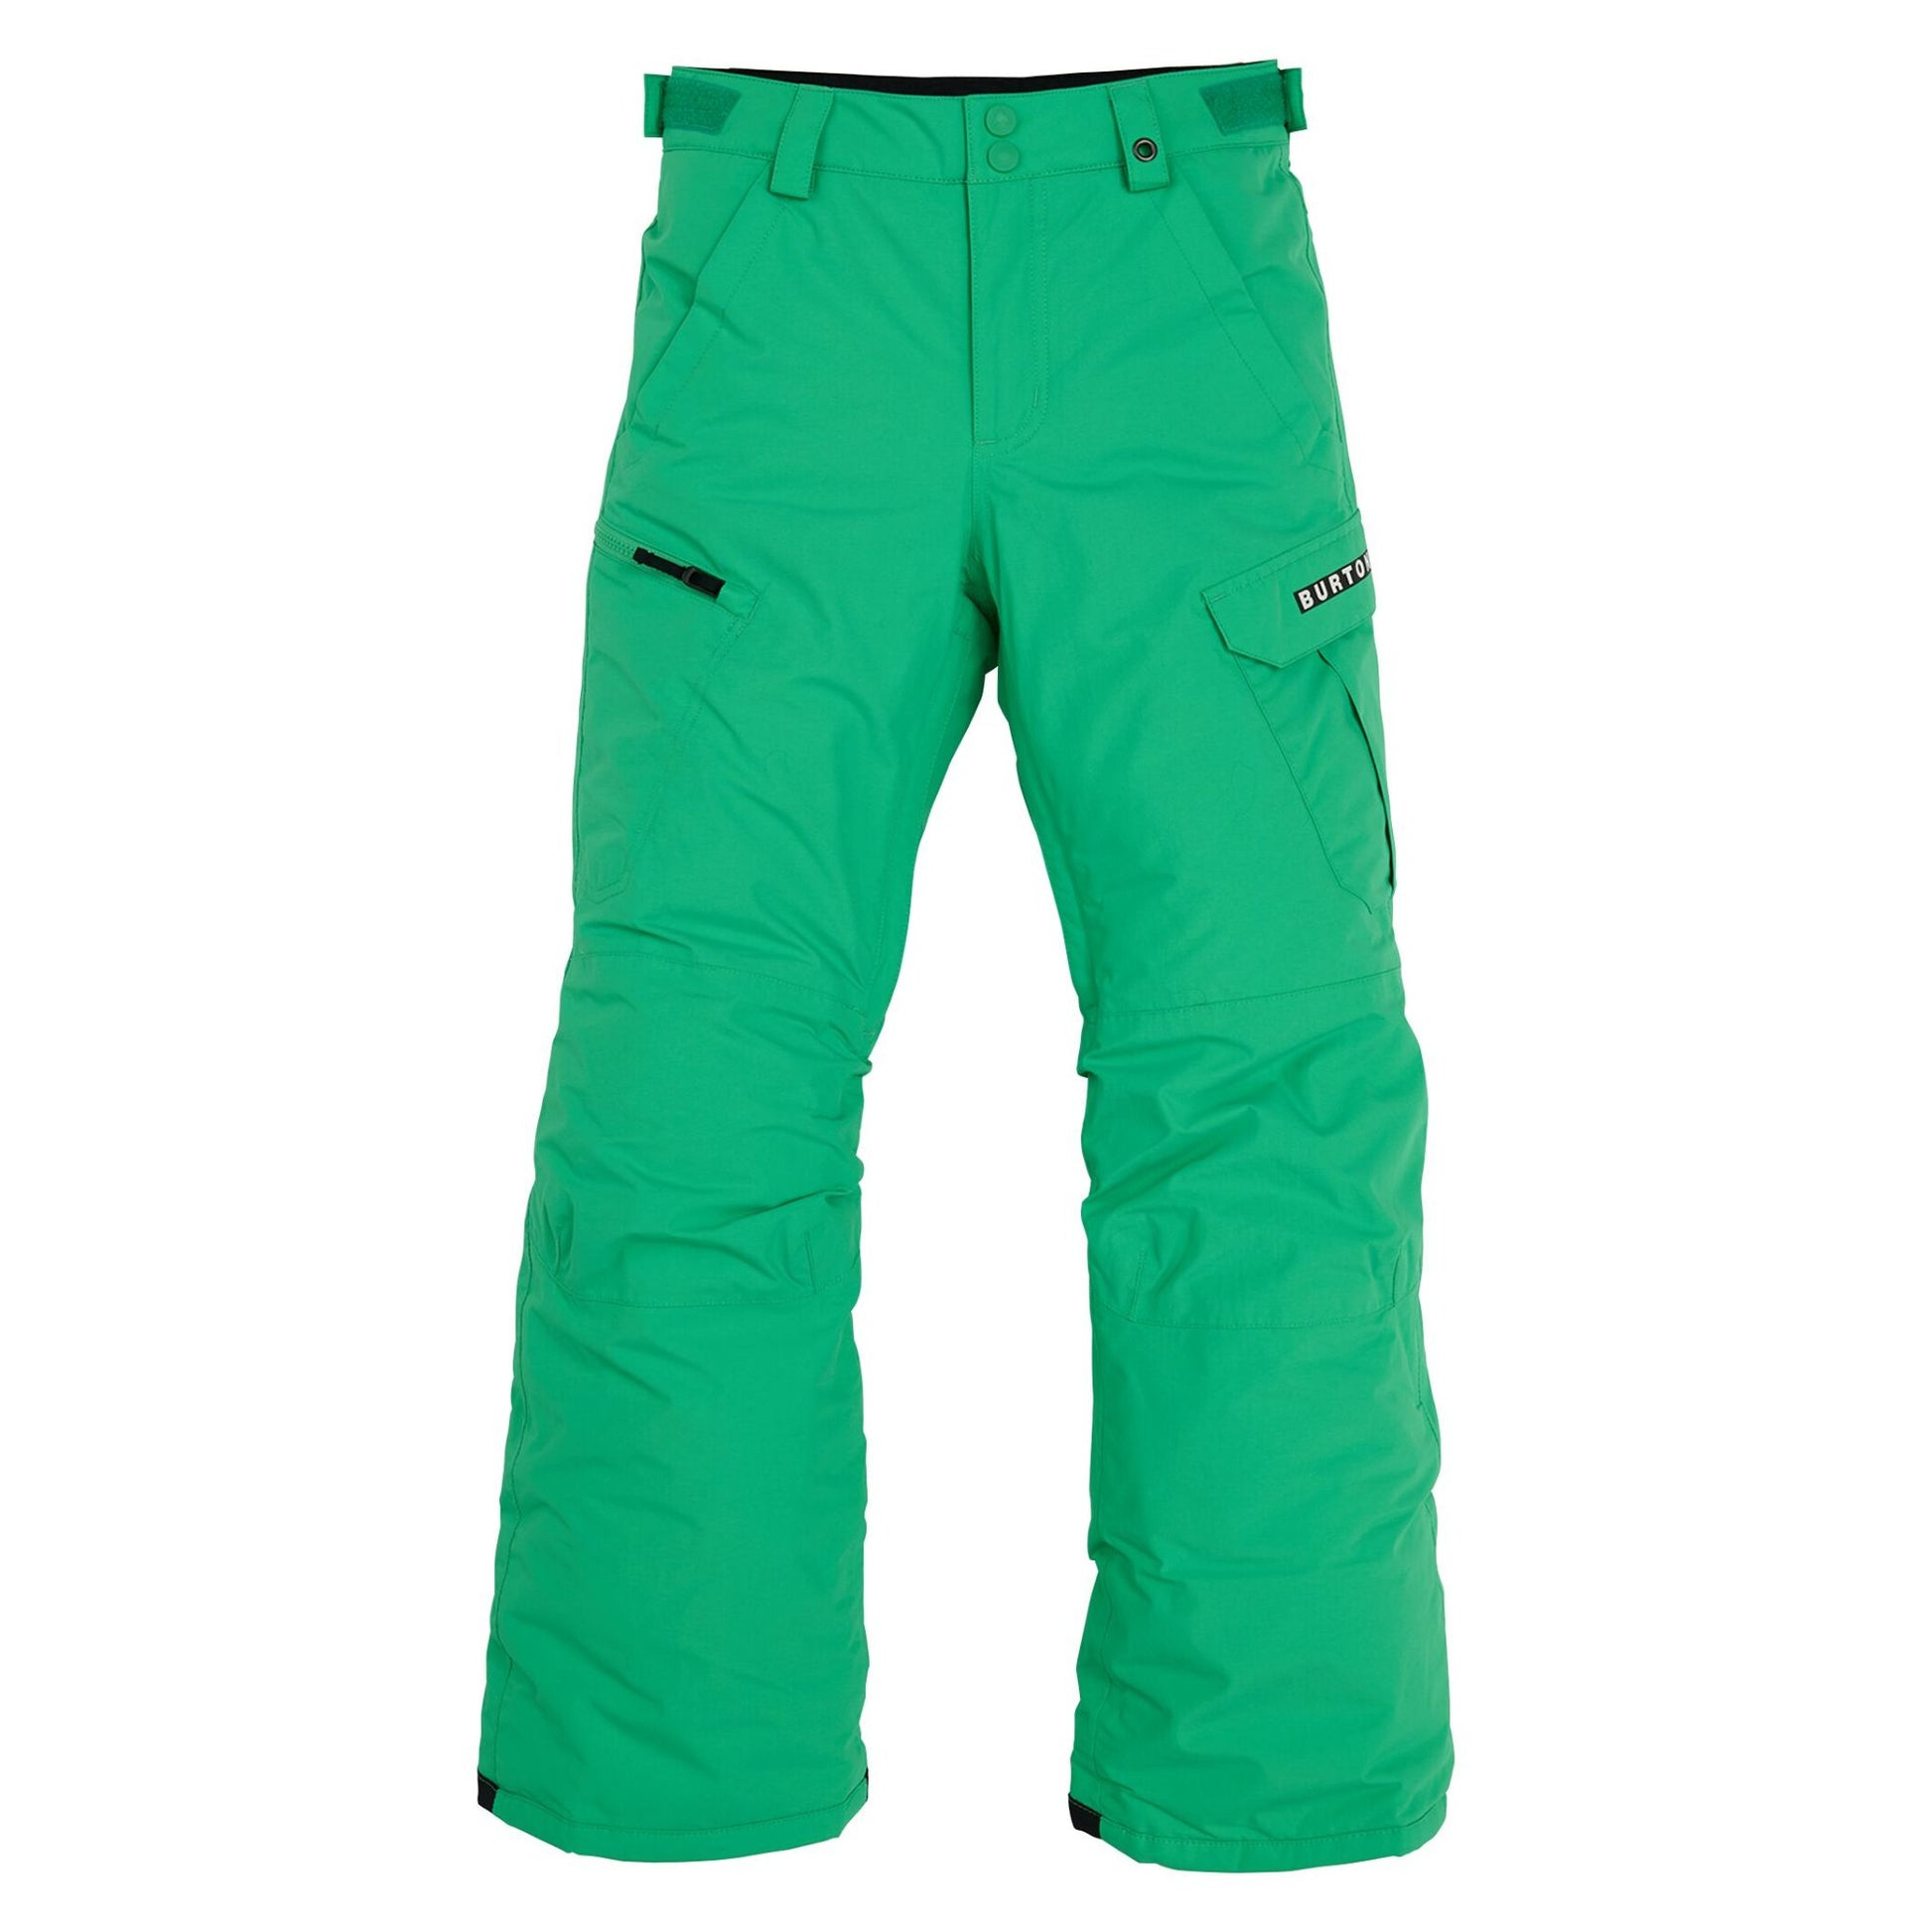 Boys' Burton Exile 2L Cargo Pants Galaxy Green Snow Pants